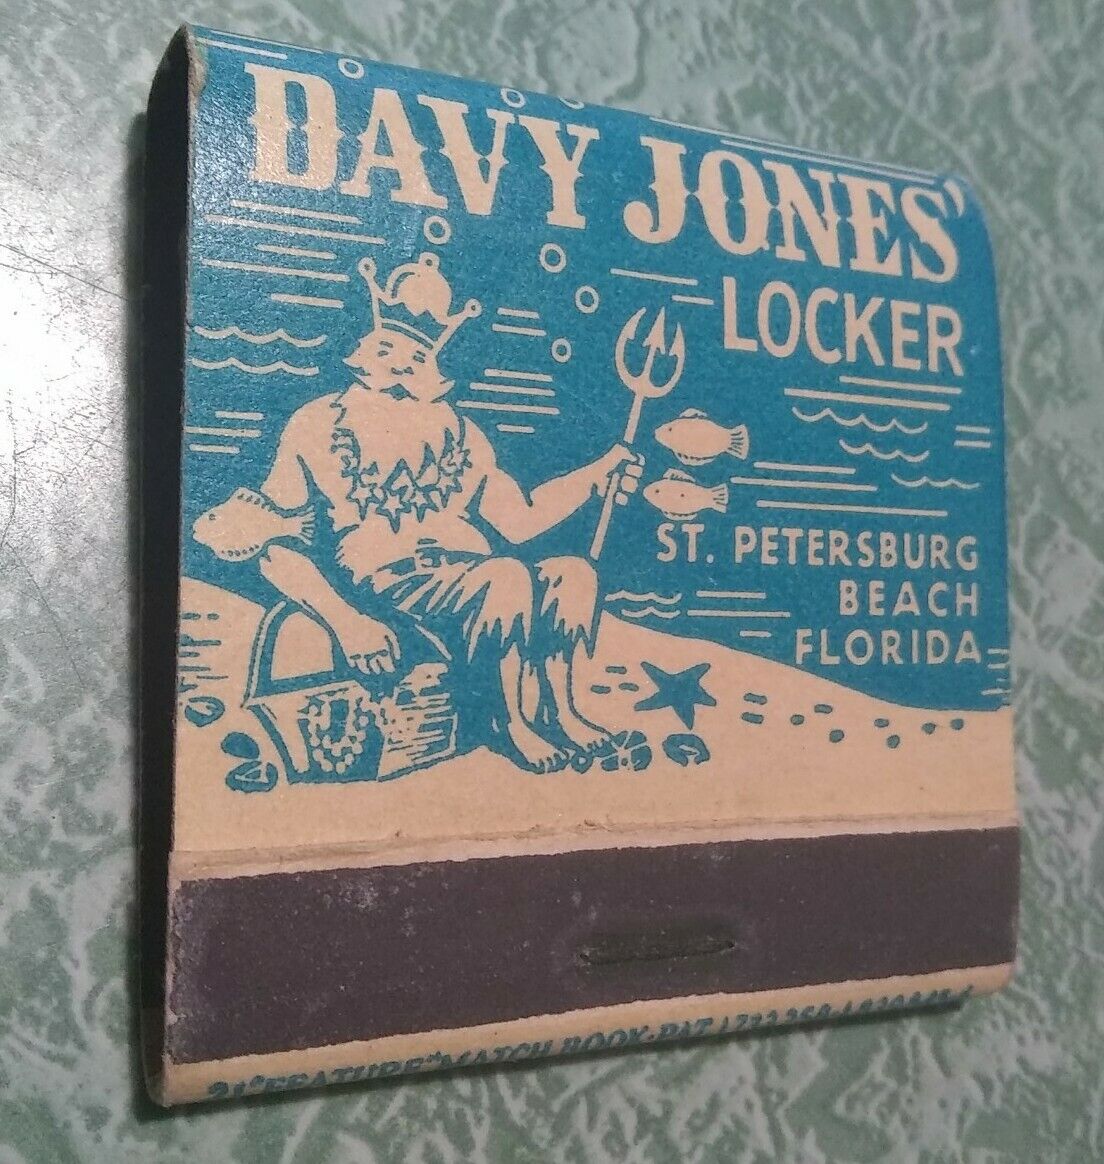 Rare Vintage Matchbook F1 Davy Jones locker St Petersburg Beach Florida feature